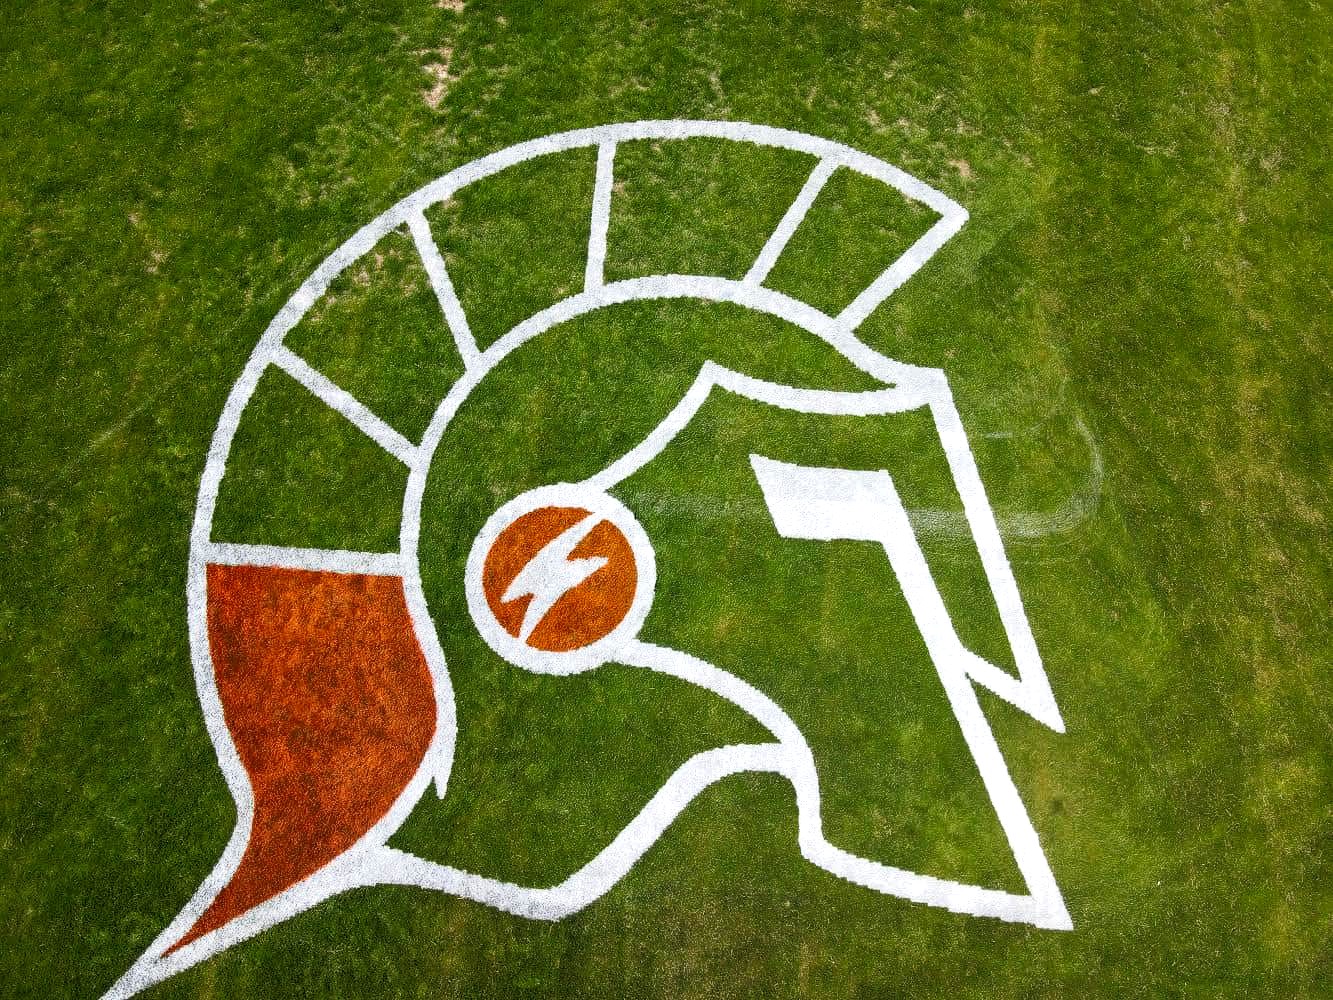 Michigan Trojans logo painted by autonomous line marking robot Turf Tank